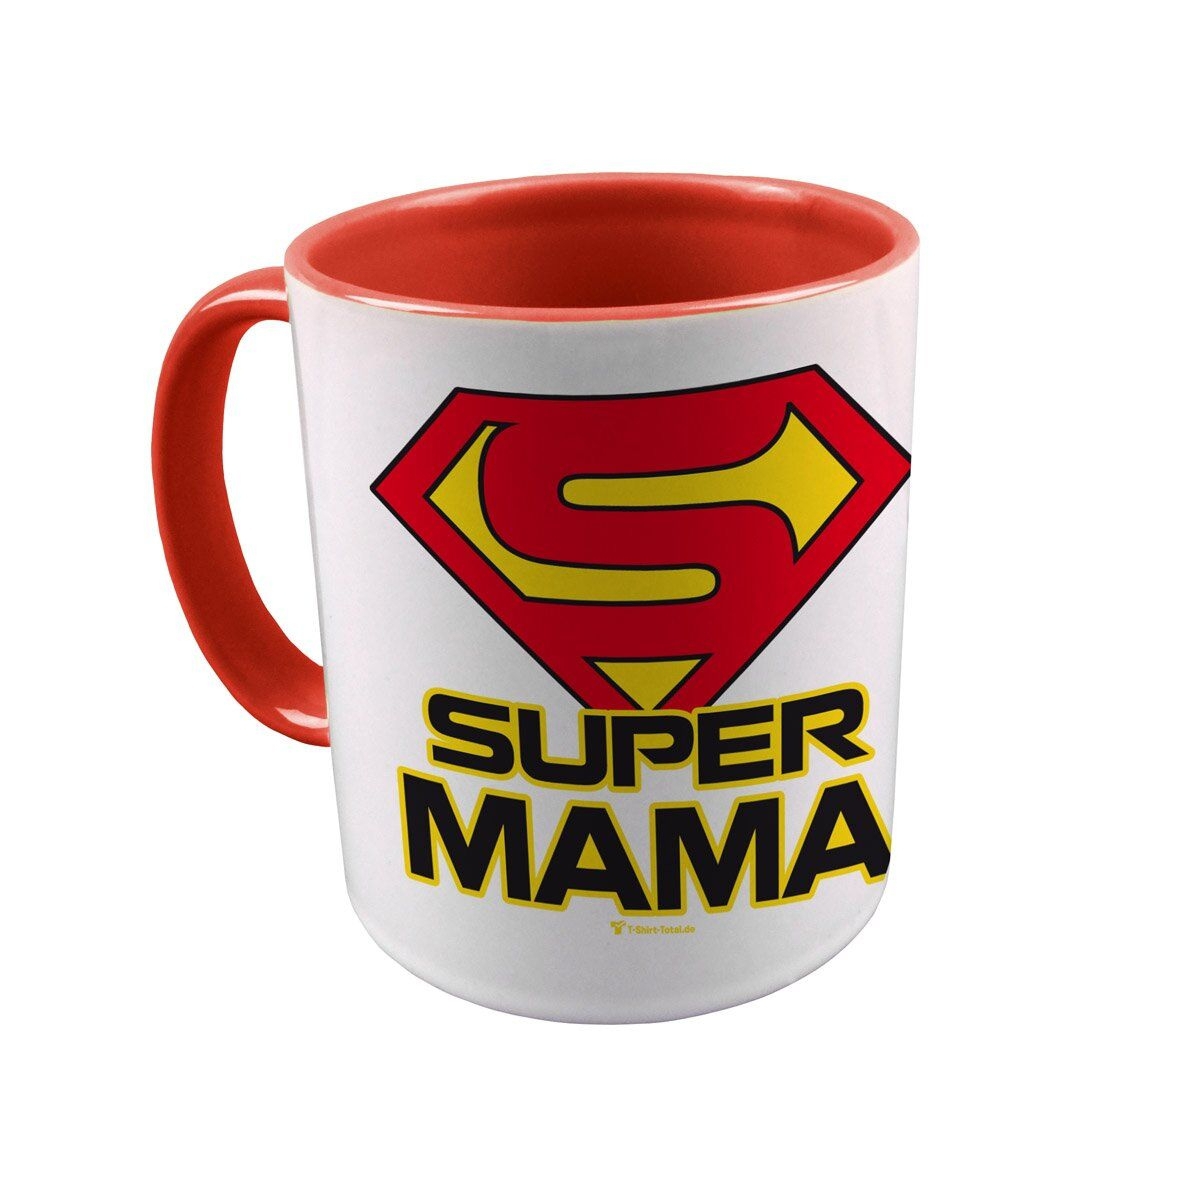 Super Mama Tasse rot / weiß